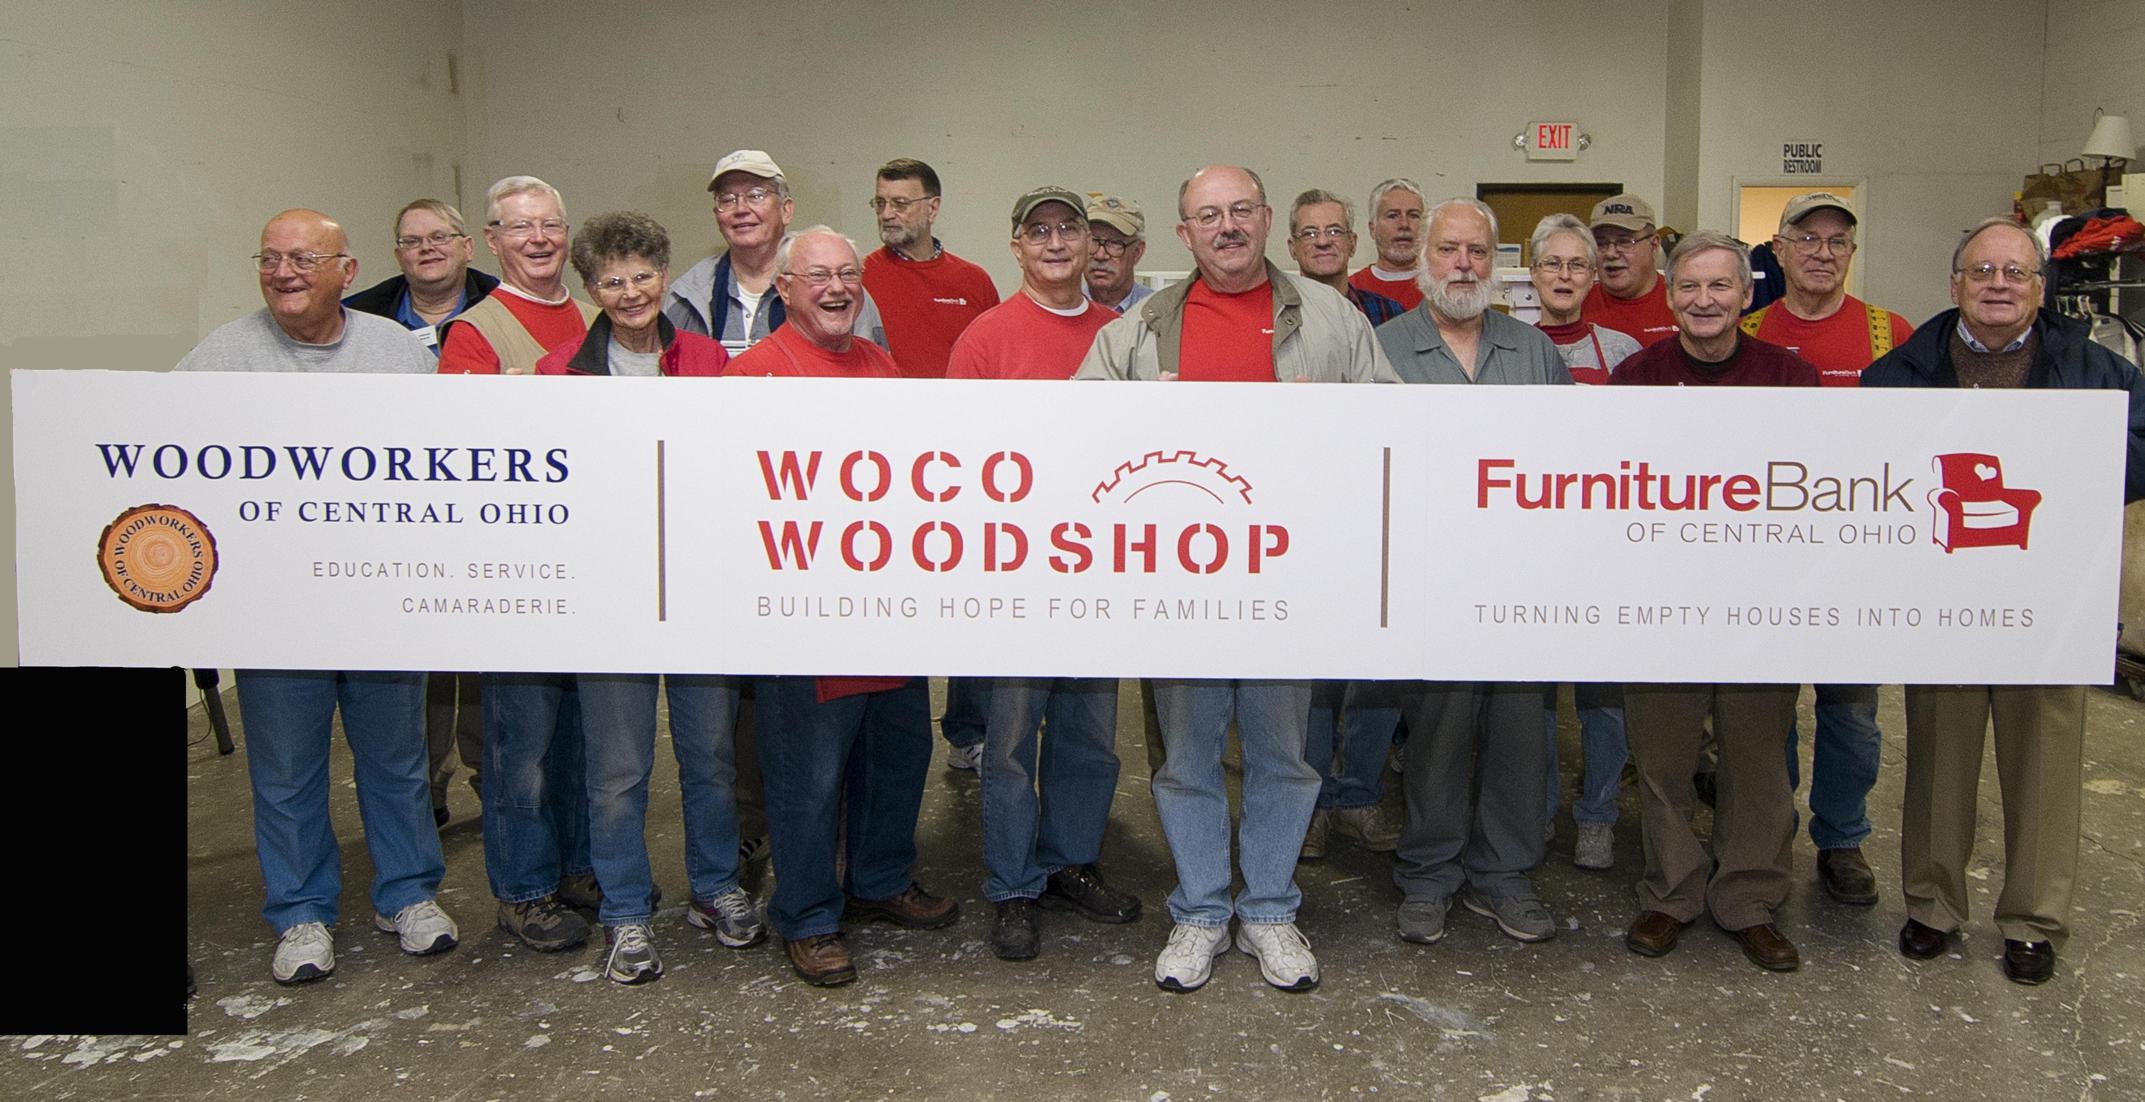 Furniture Bank Names Woco Woodshop Woco